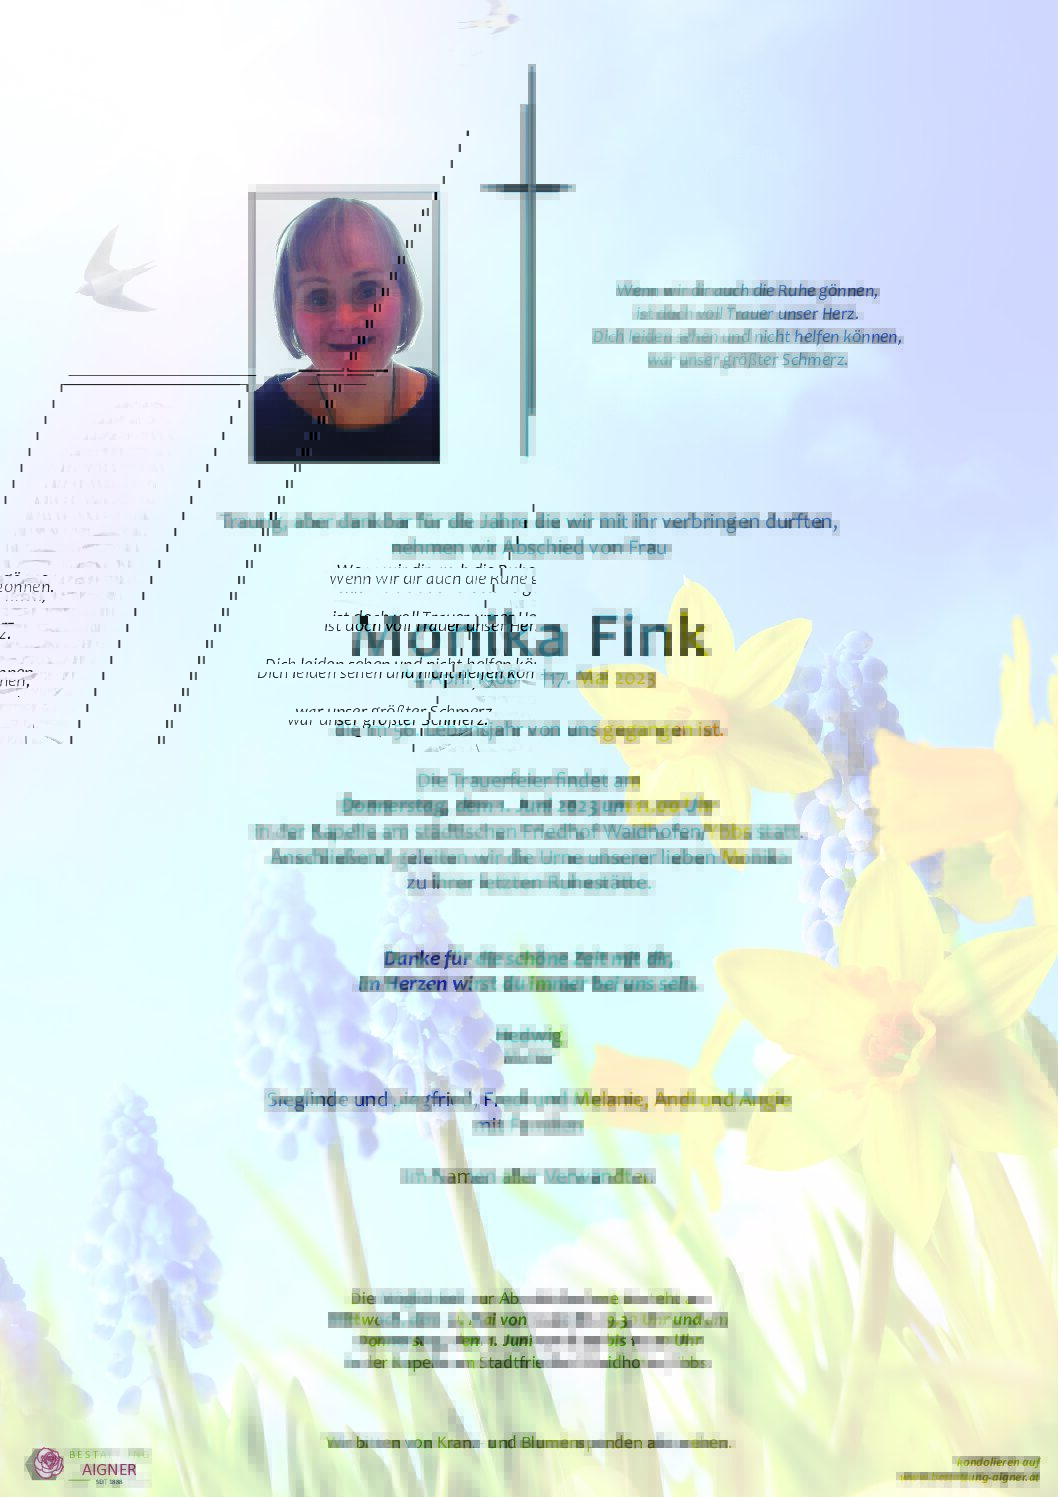 Monika Fink